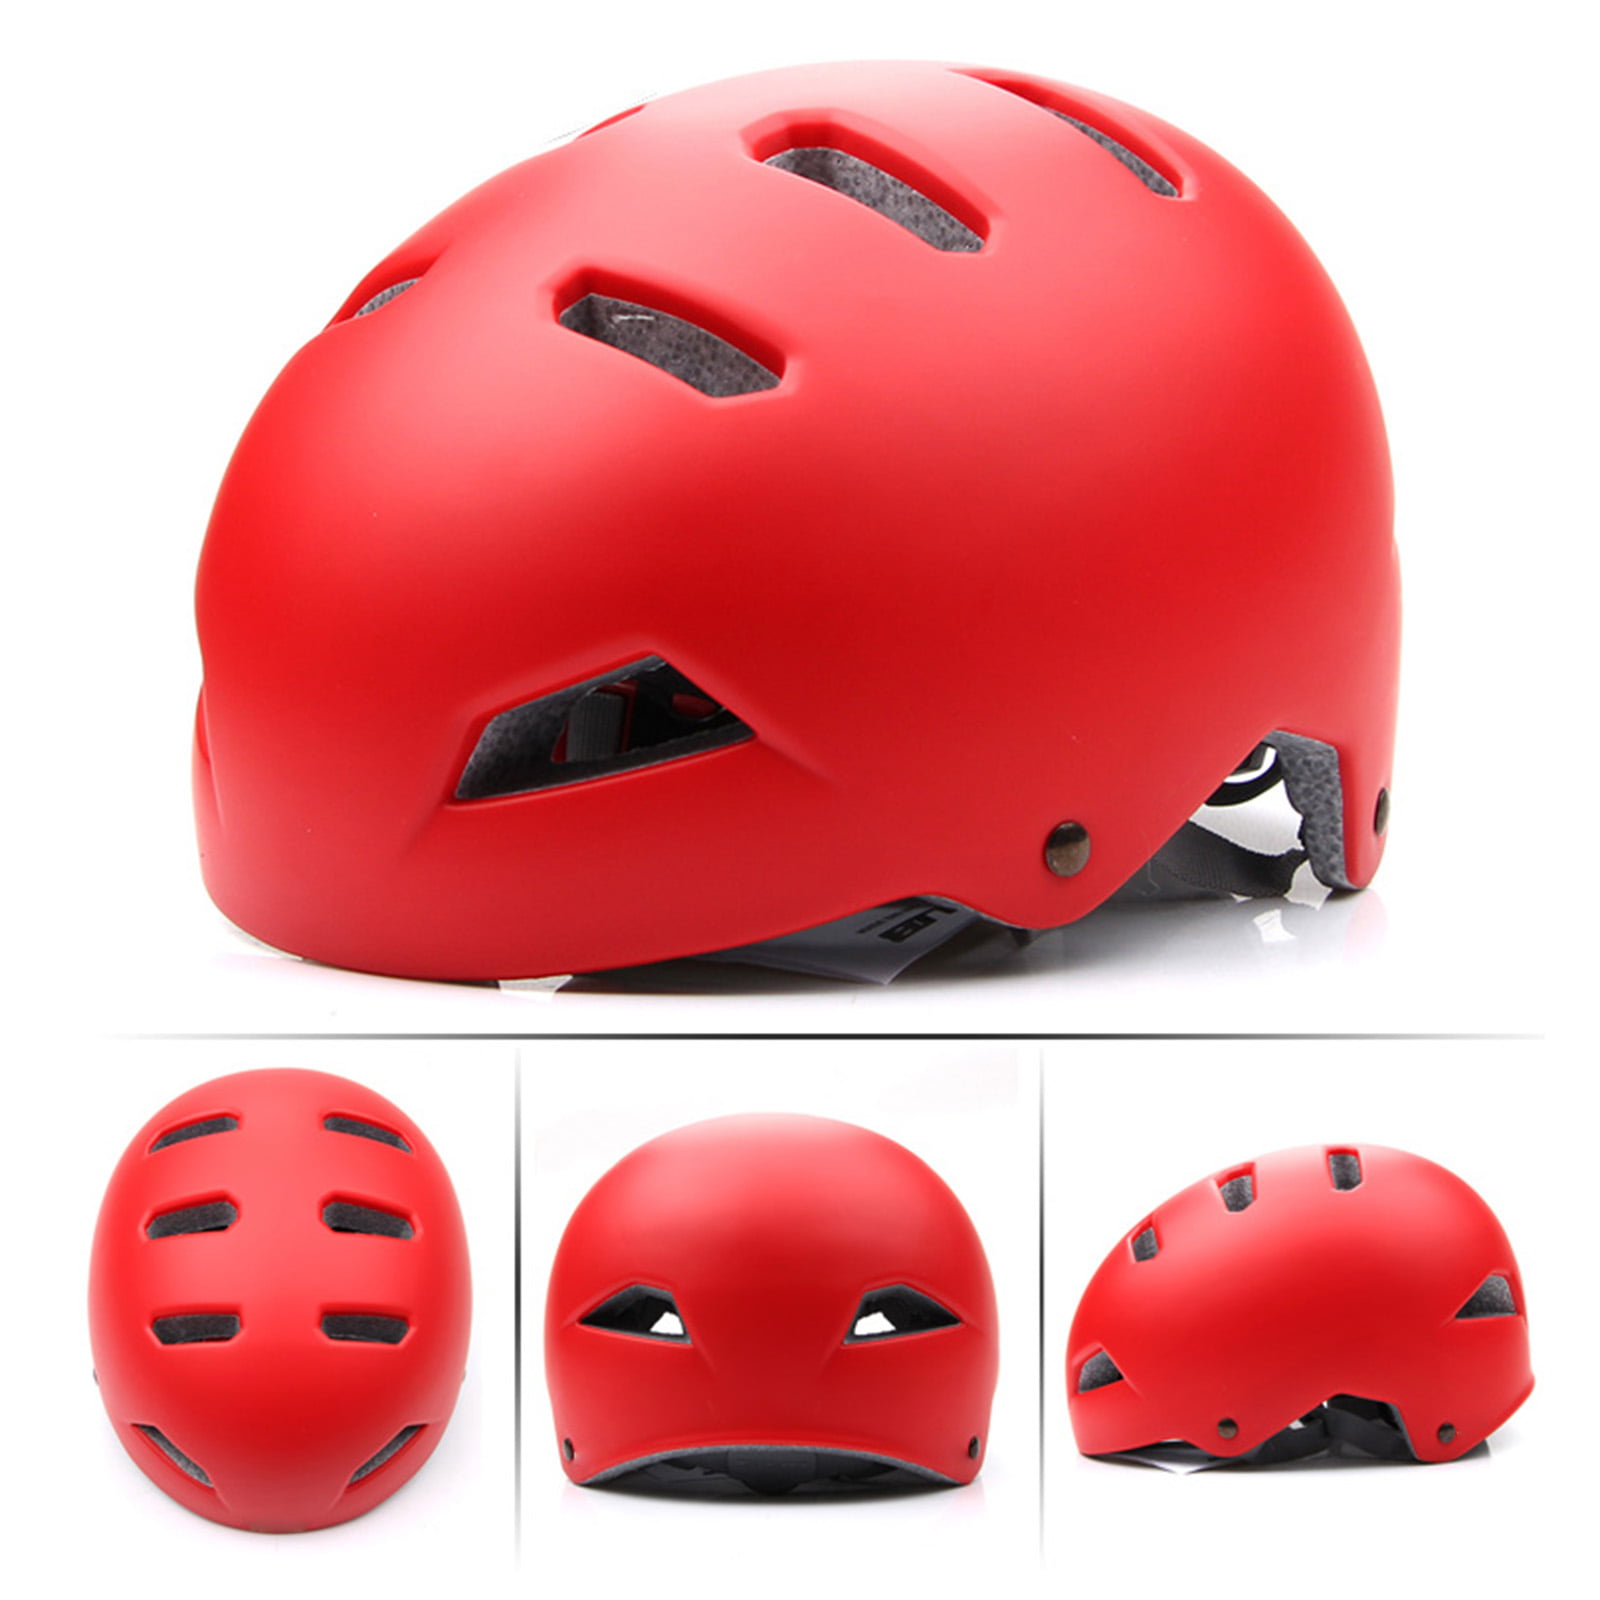 GUB V1 Adult Helmet Rock Climbing Mountain Cycling Bike Bicycle Size 55-59cm New 